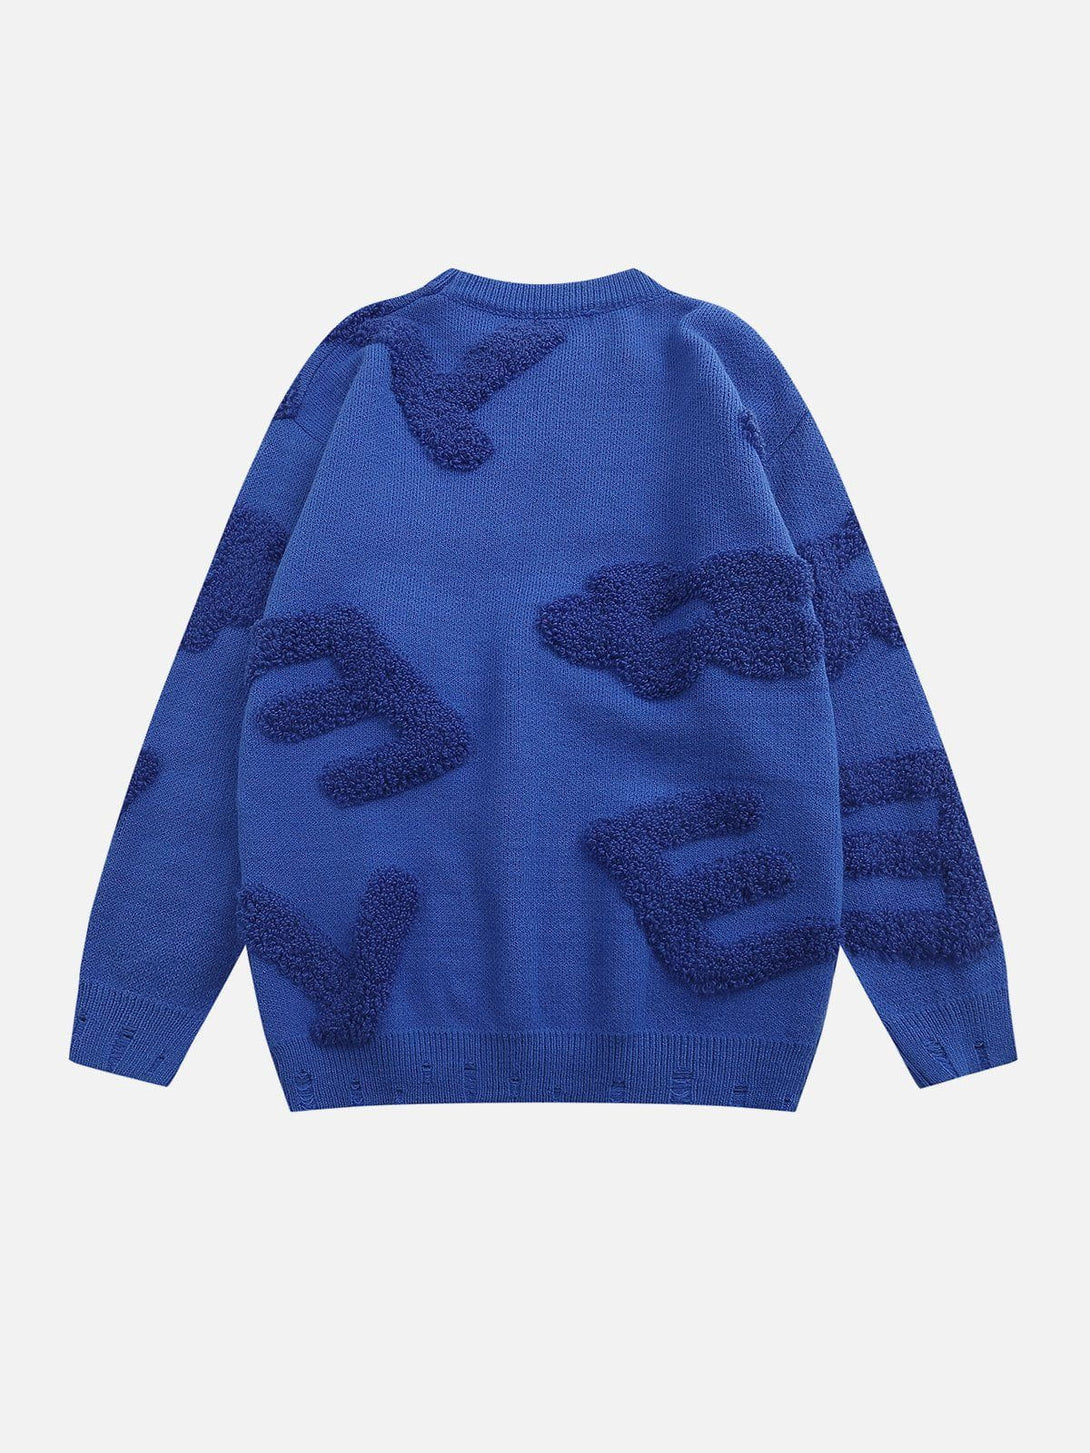 Majesda® - Letters Jacquard Sweater outfit ideas streetwear fashion